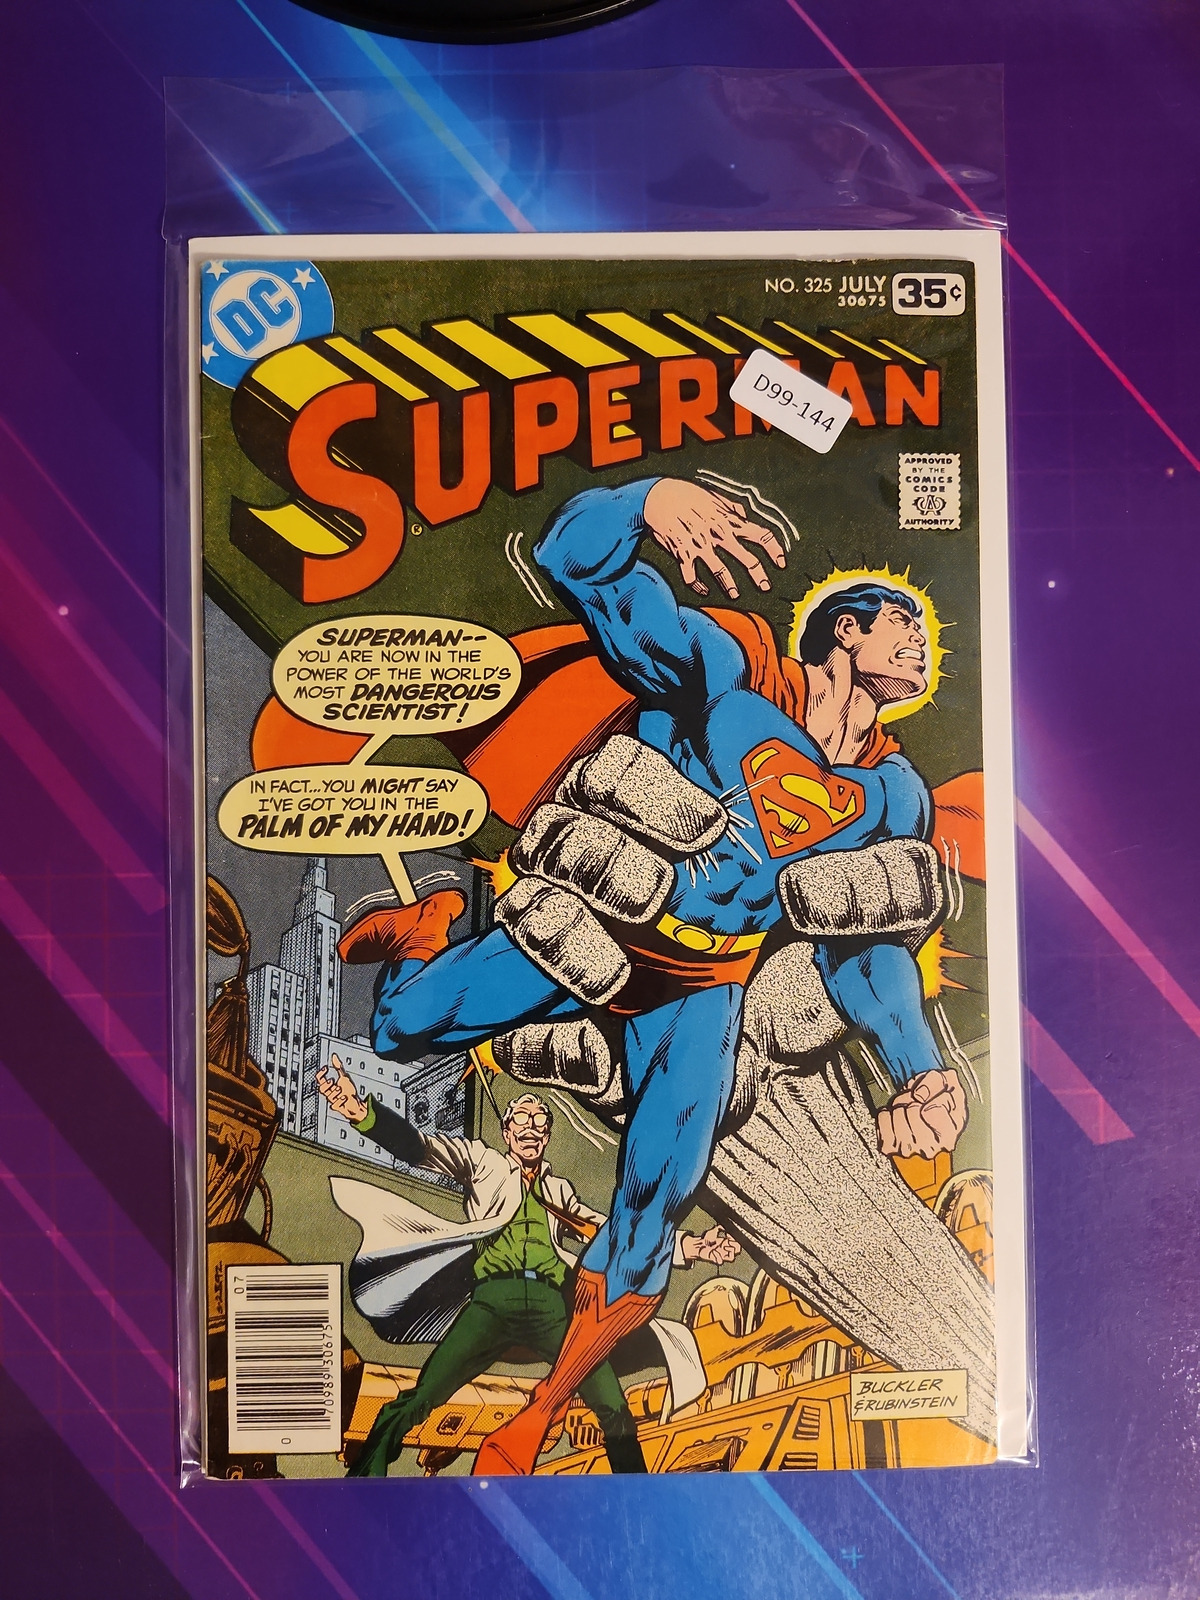 SUPERMAN #325 VOL. 1 8.0 NEWSSTAND DC COMIC BOOK D99-144